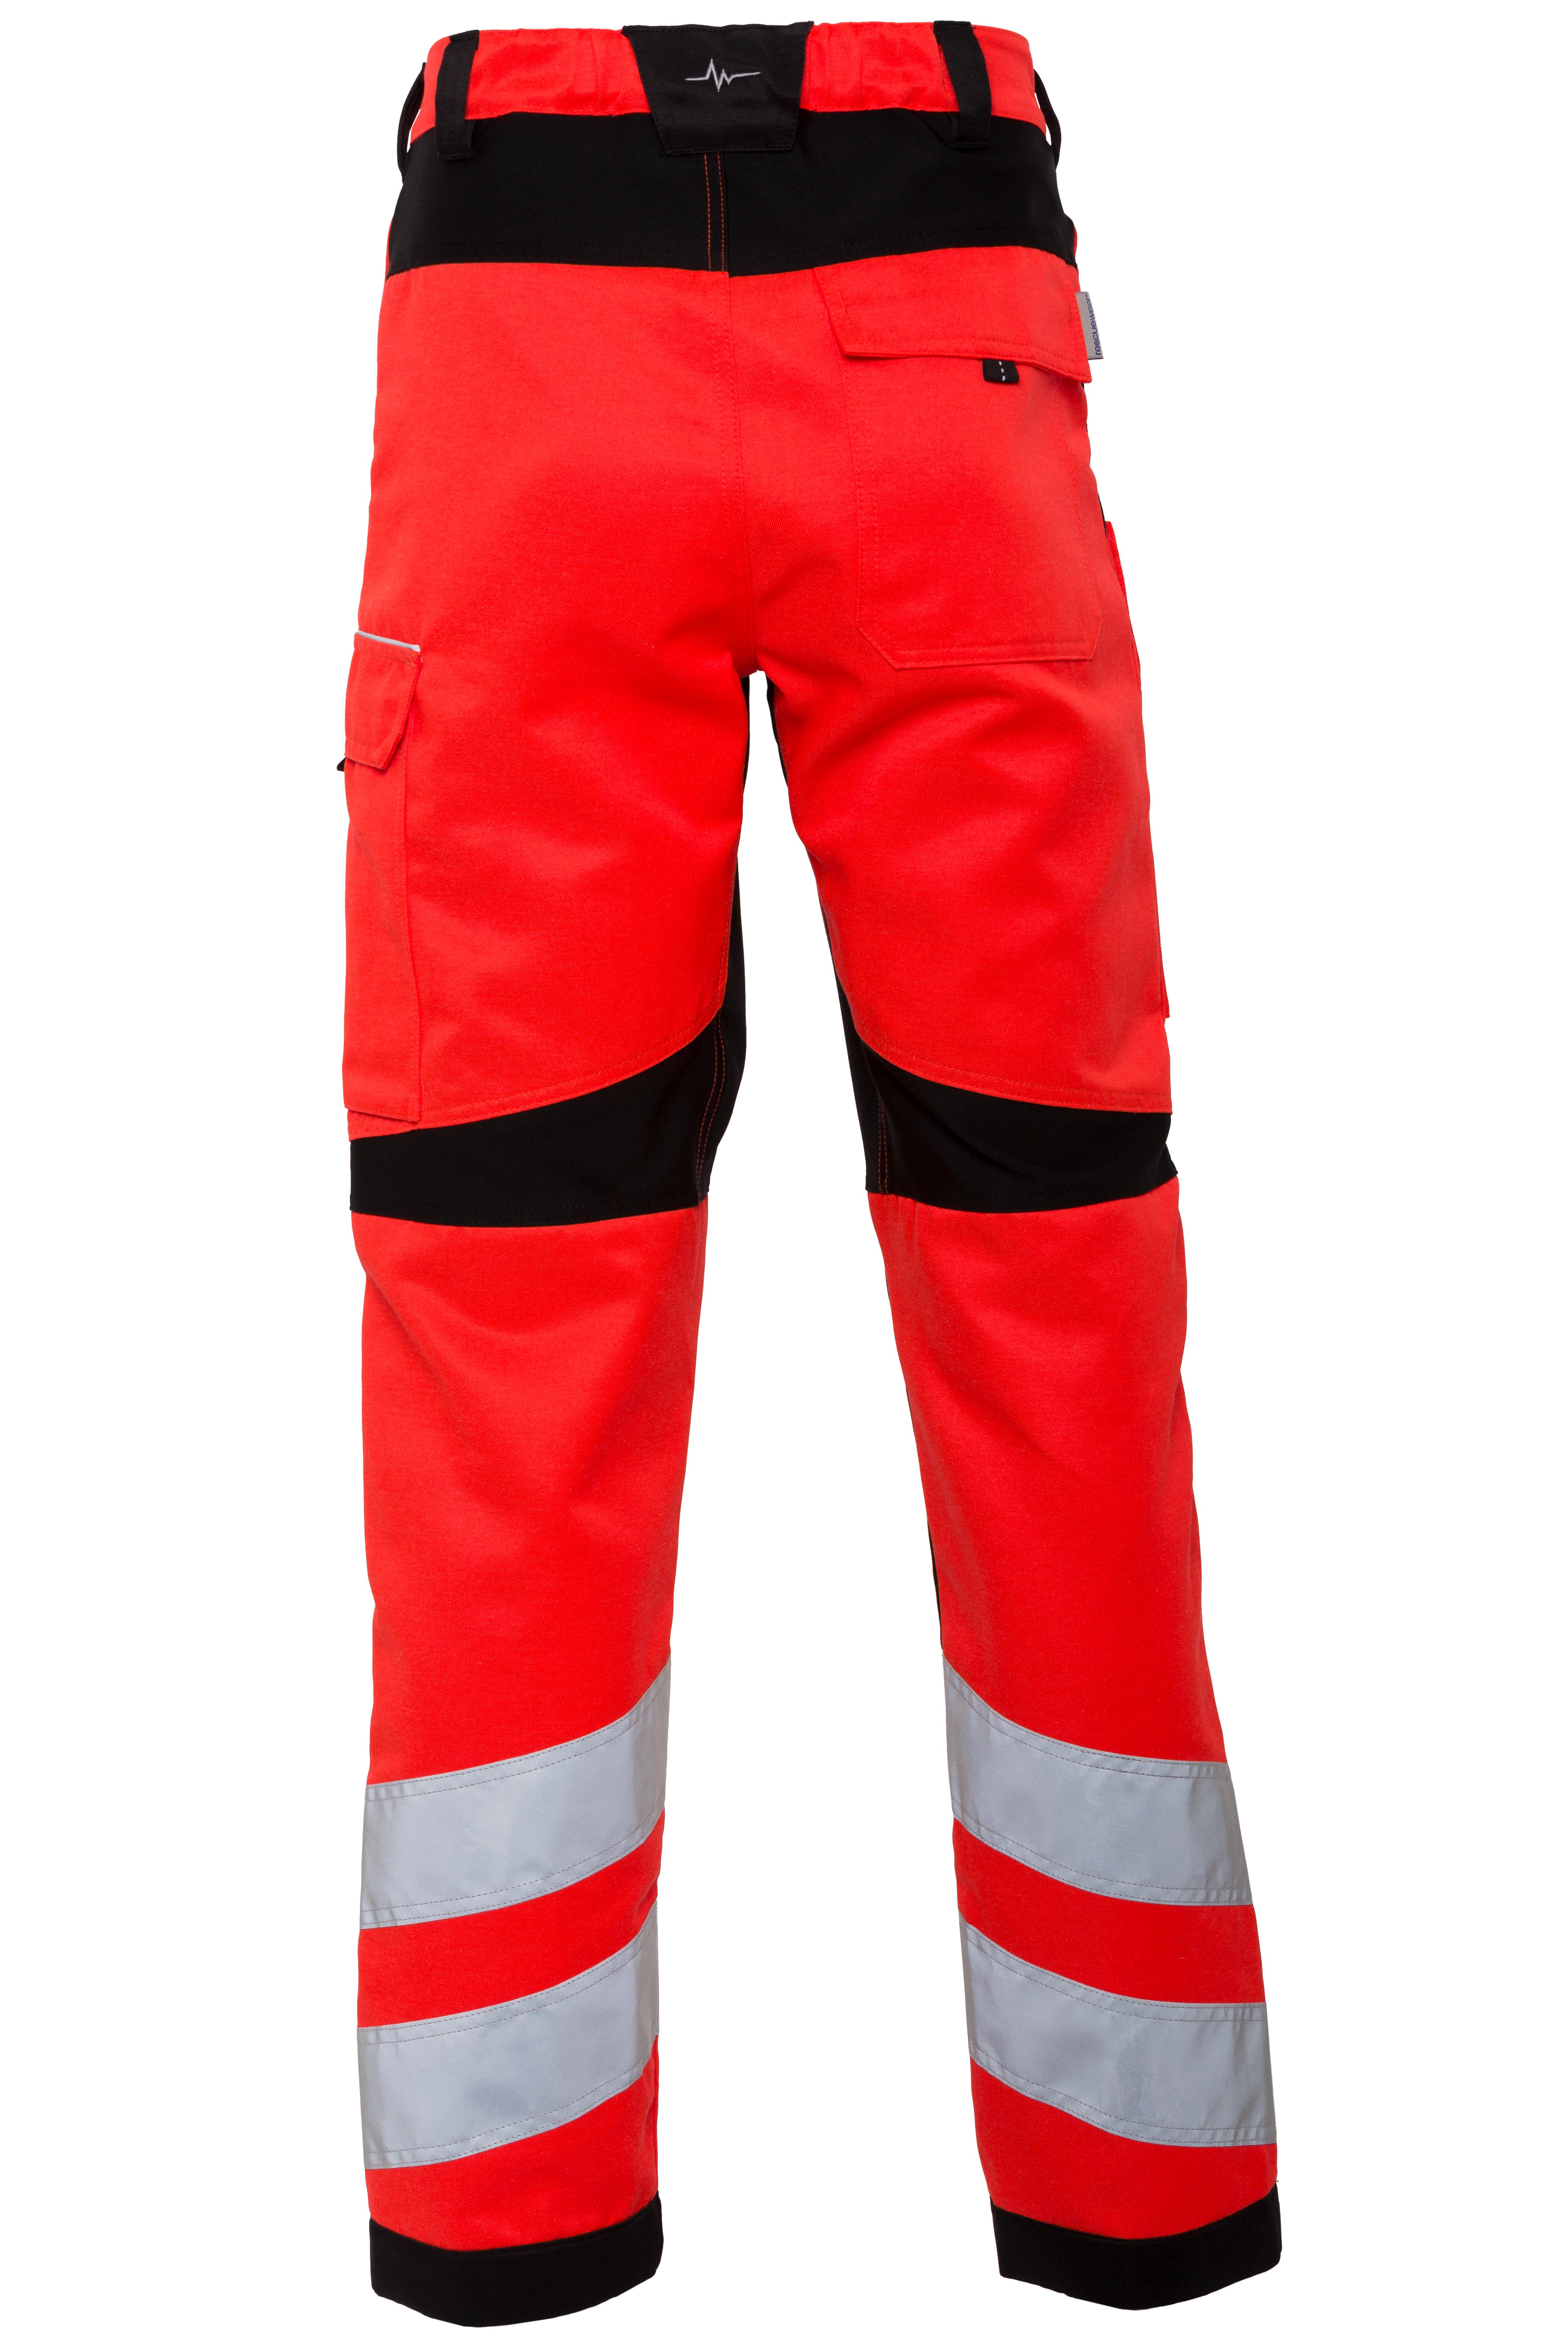 Rescuewear Unisex Hose Stretch HiVis Klasse 2 Neon Rot / Schwarz - 46